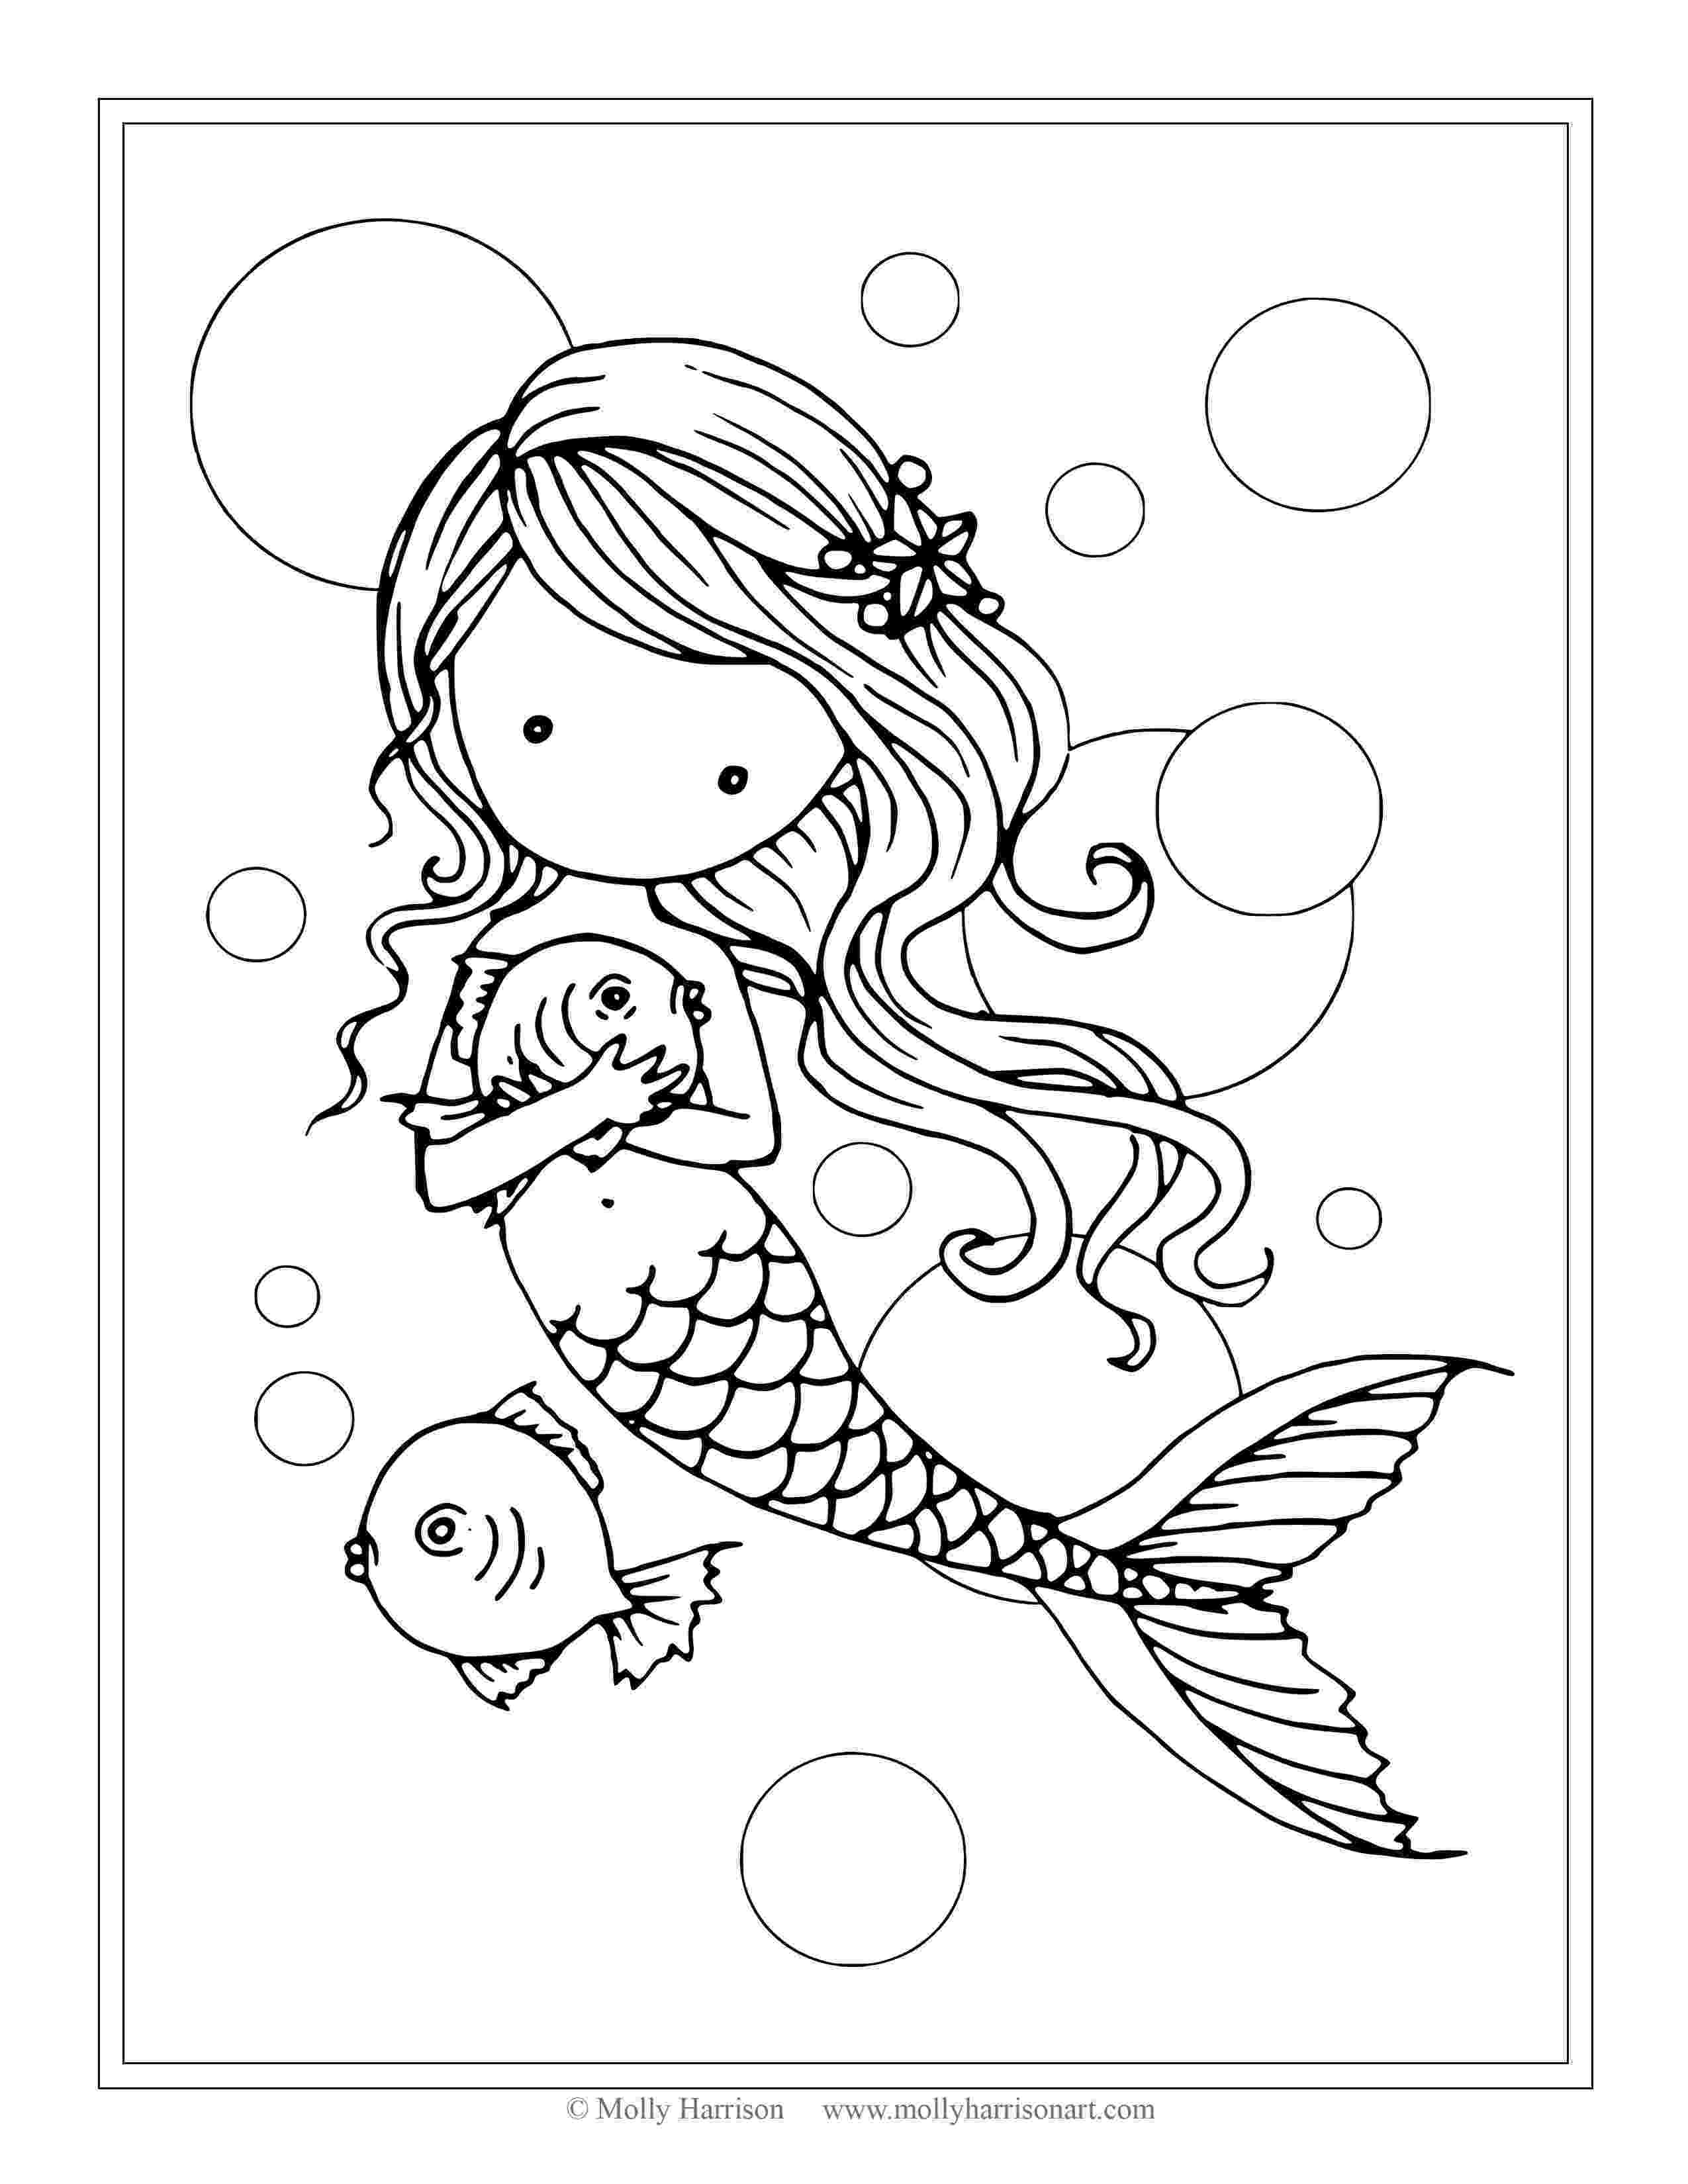 mermaid coloring page free mermaid with fish coloring page by molly harrison mermaid page coloring 